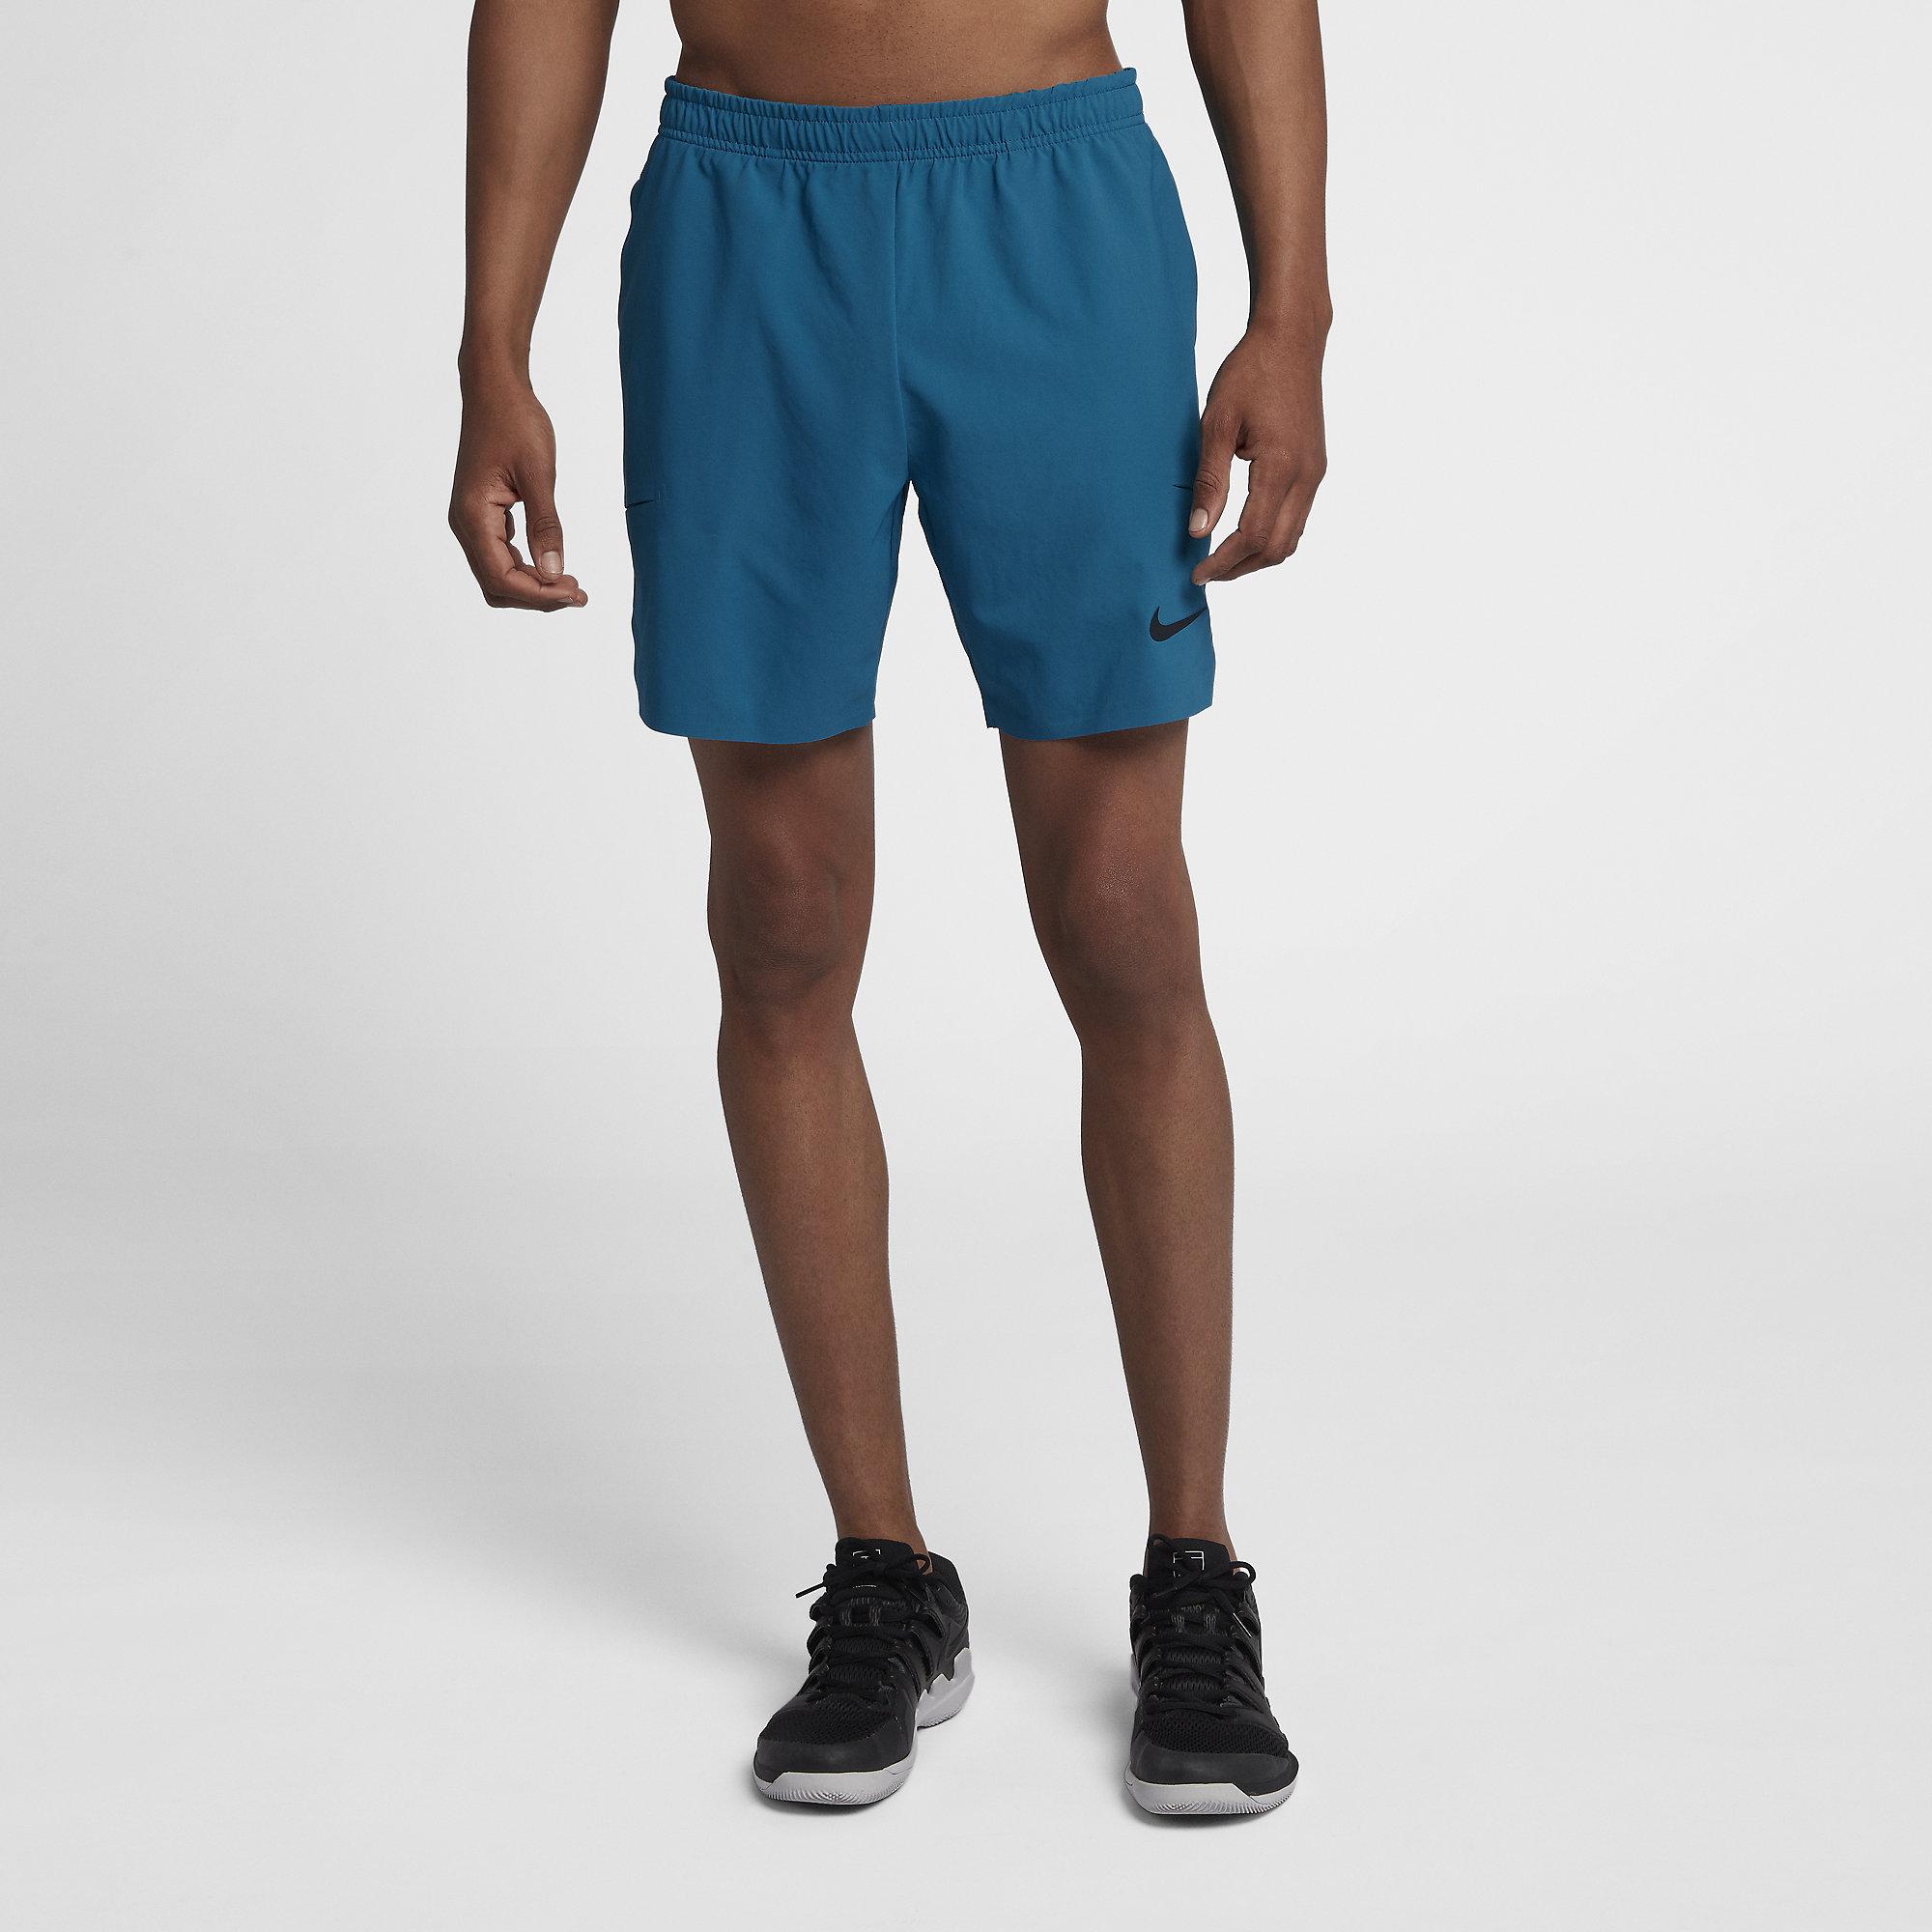 Nike Mens Court Flex Ace 7 Inch Shorts - Green Abyss/Black - Tennisnuts.com